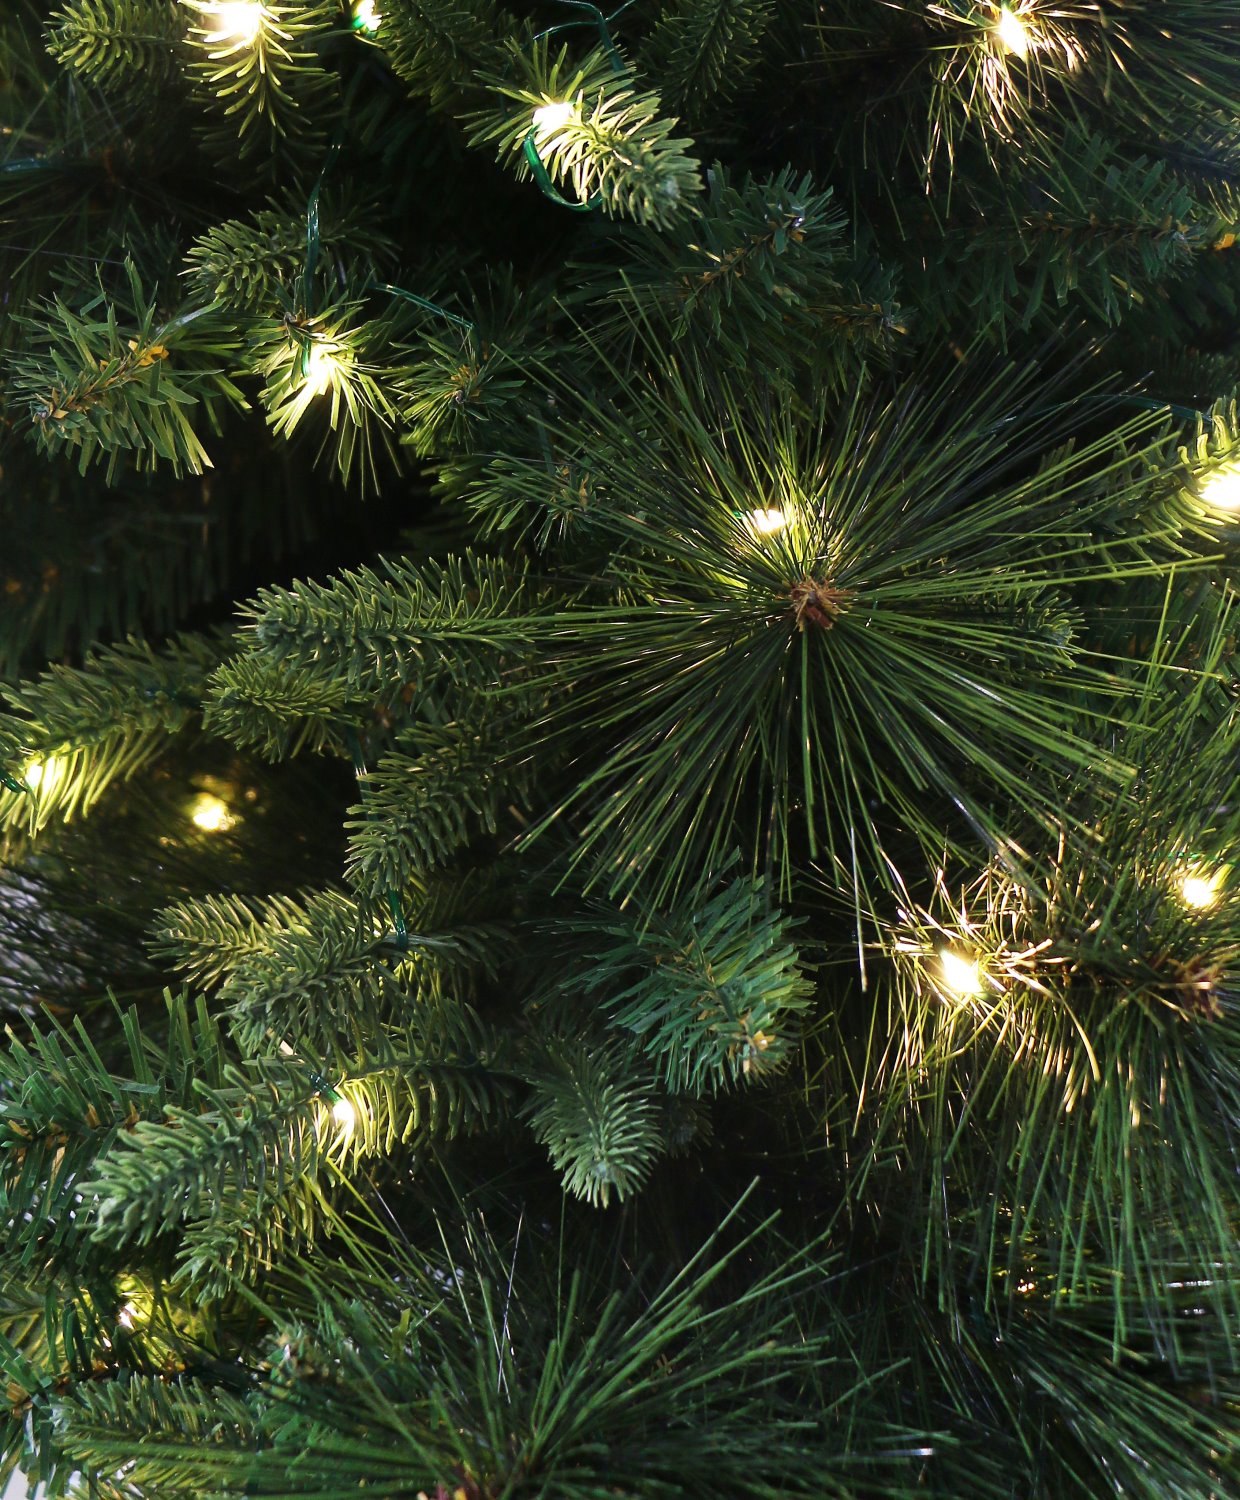 Makalu 4ft National Pine Mix Pre-lit Upside Down Christmas Tree - Warm White